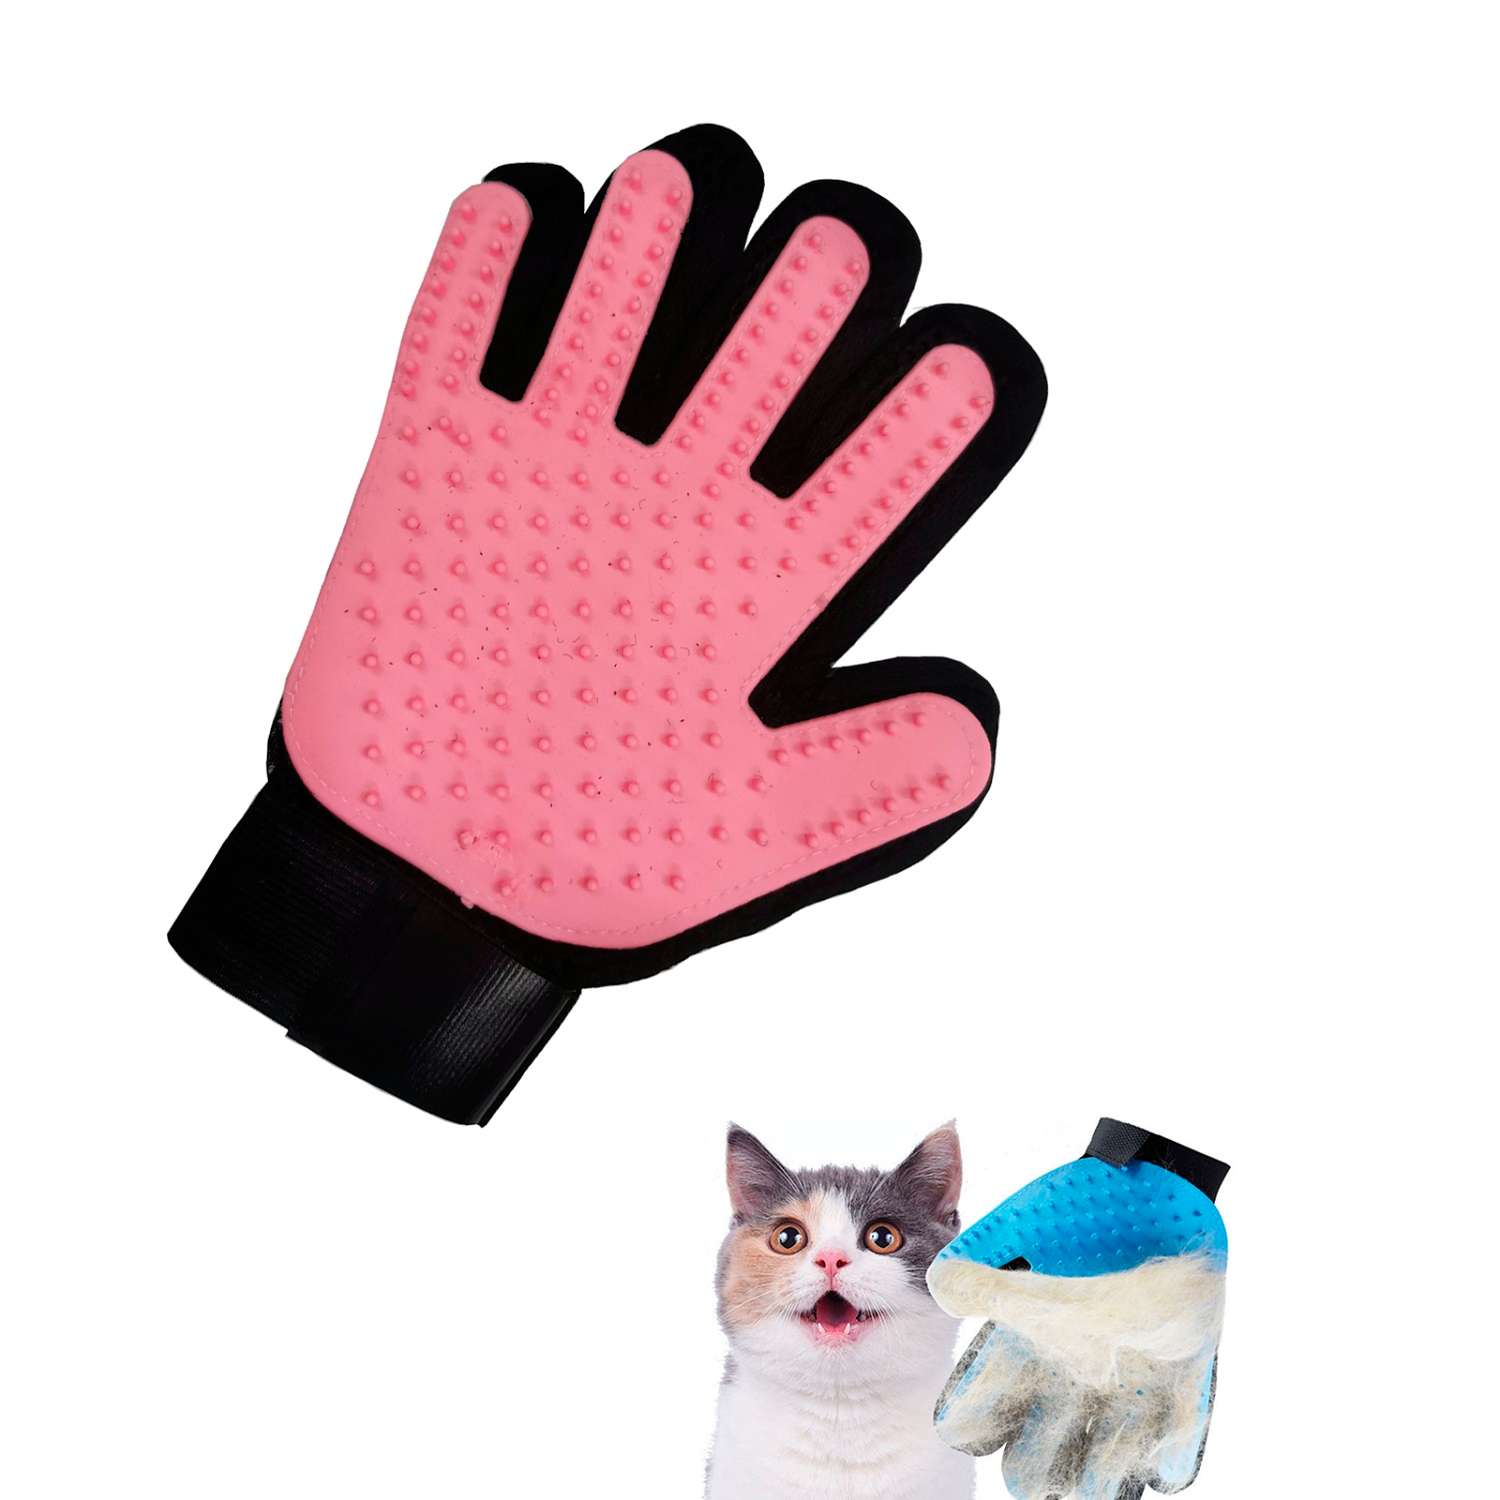 Перчатка для груминга Stefan массажная для вычесывания шерсти животных розовая 23х17см - фото 2